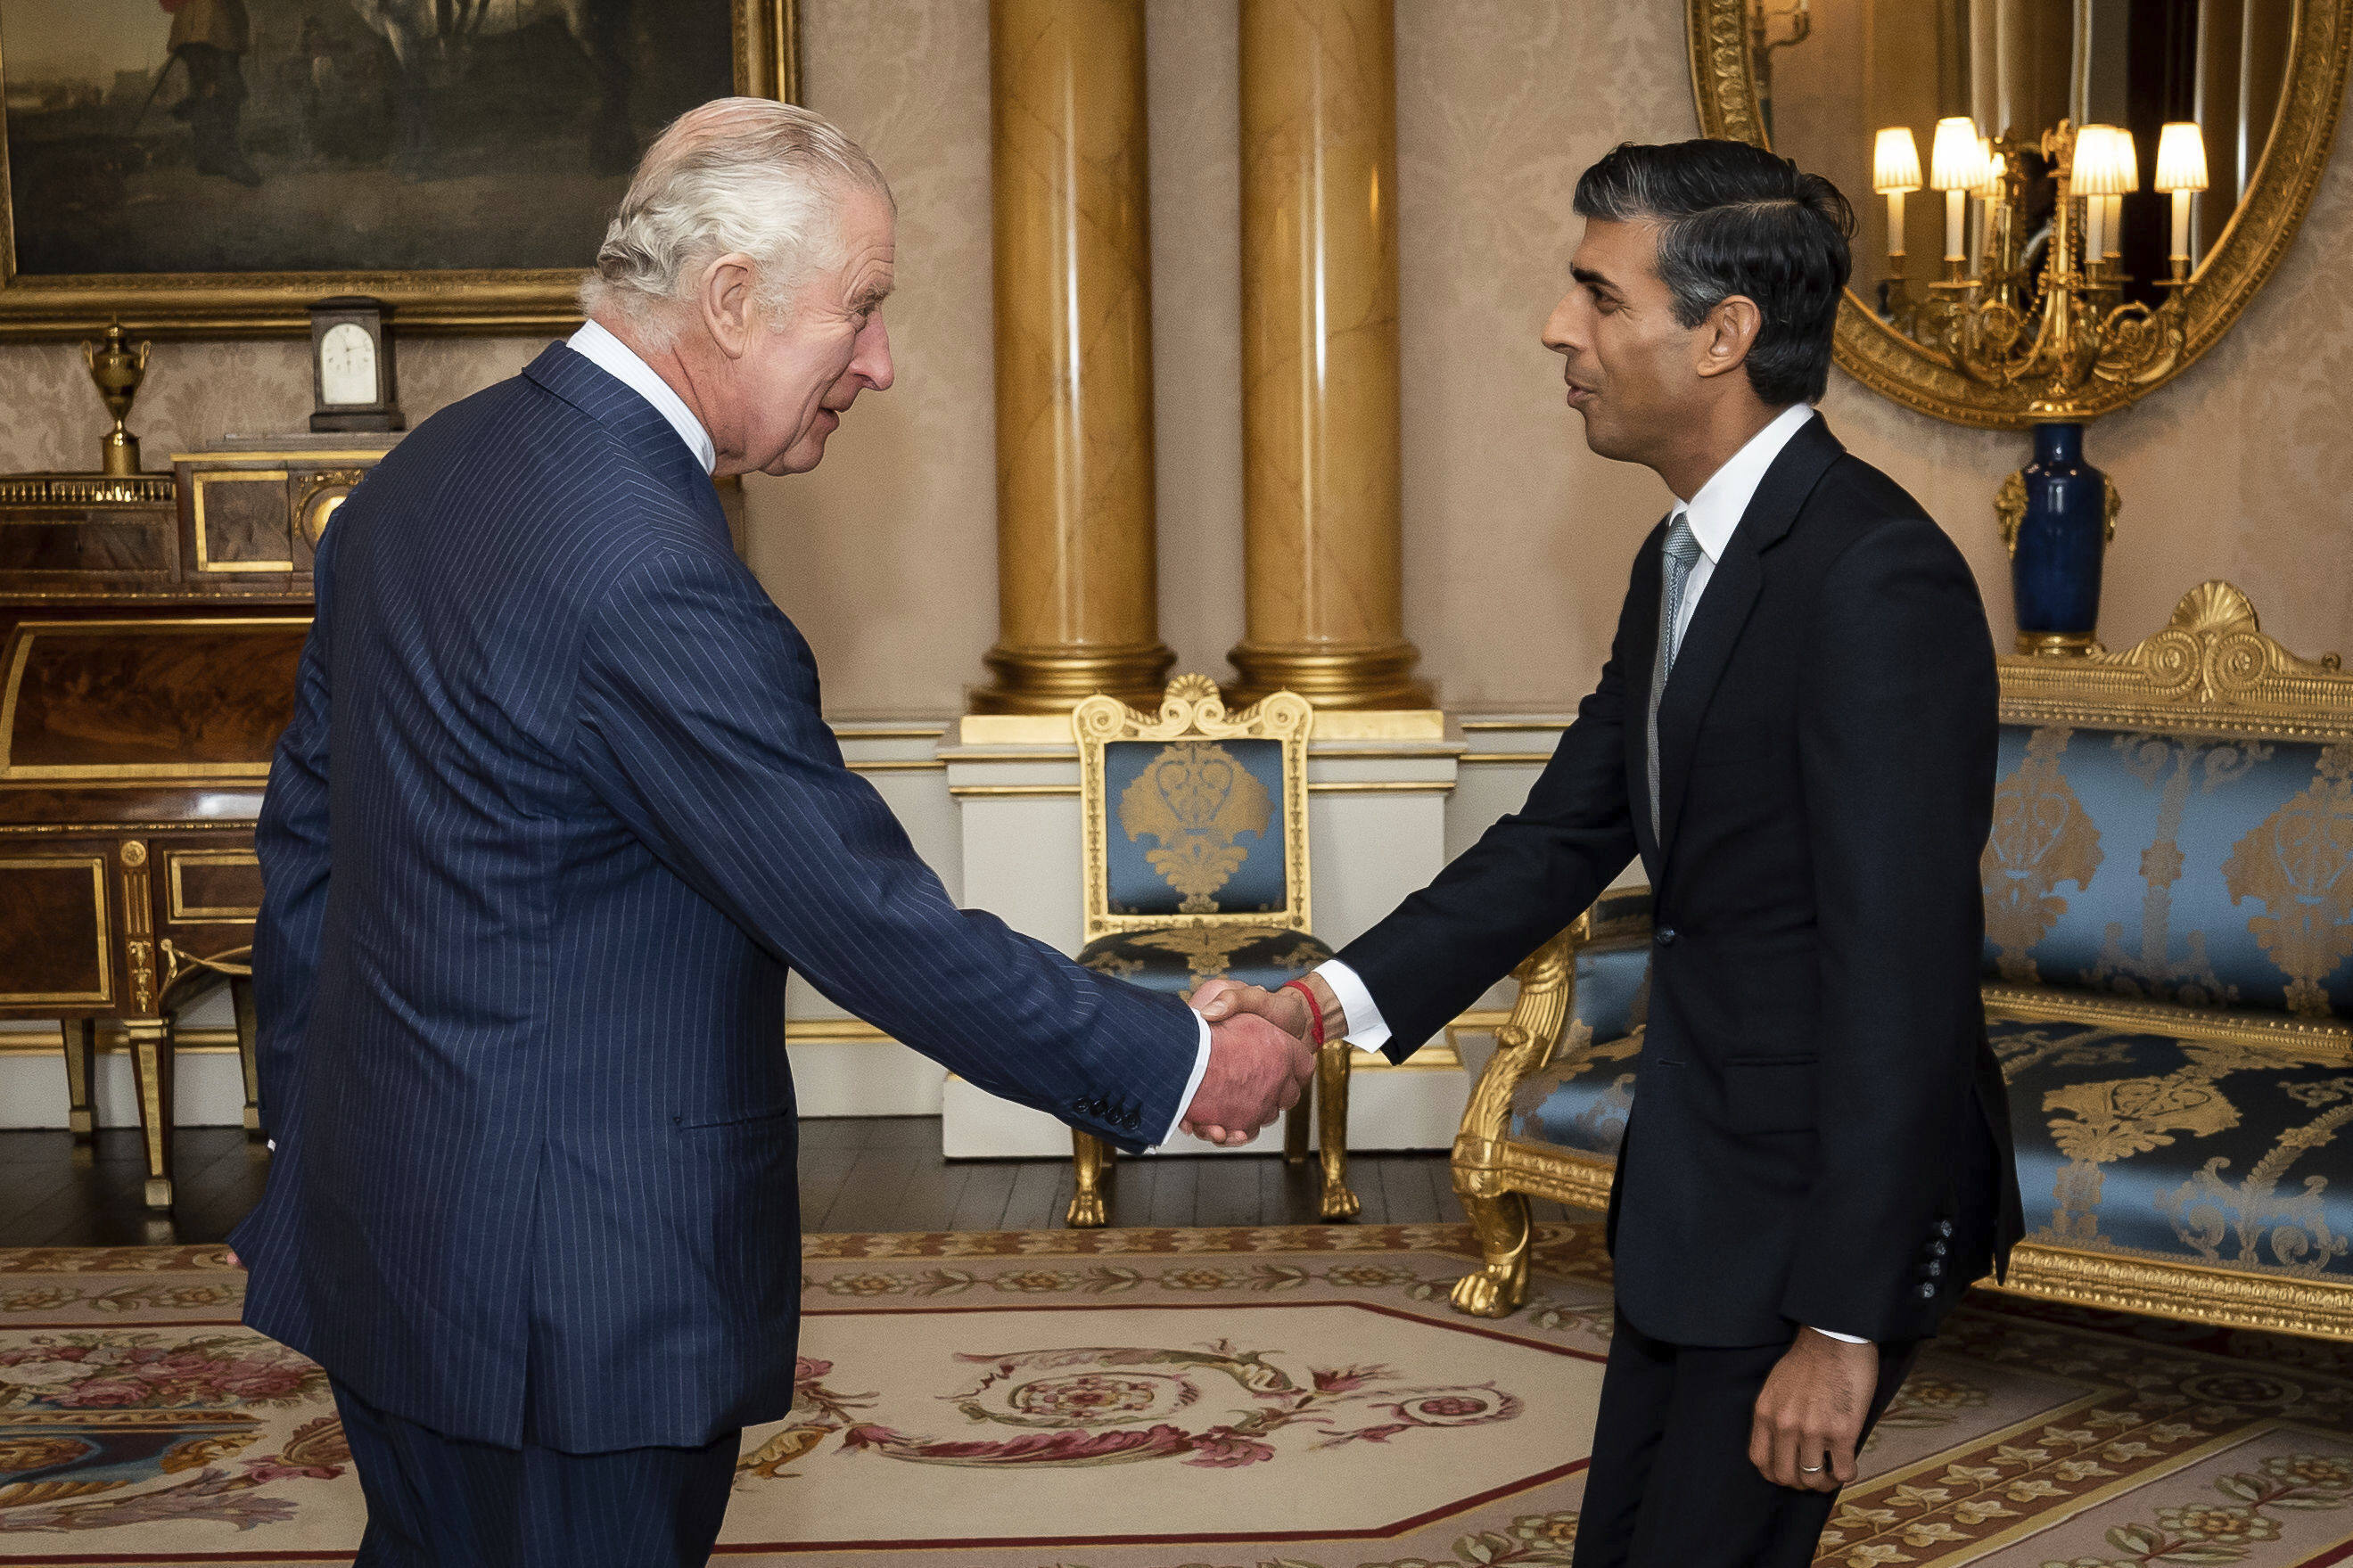 King Charles welcomes Rishi Sunak during an audience at Buckingham Palace, London. Photo: AP